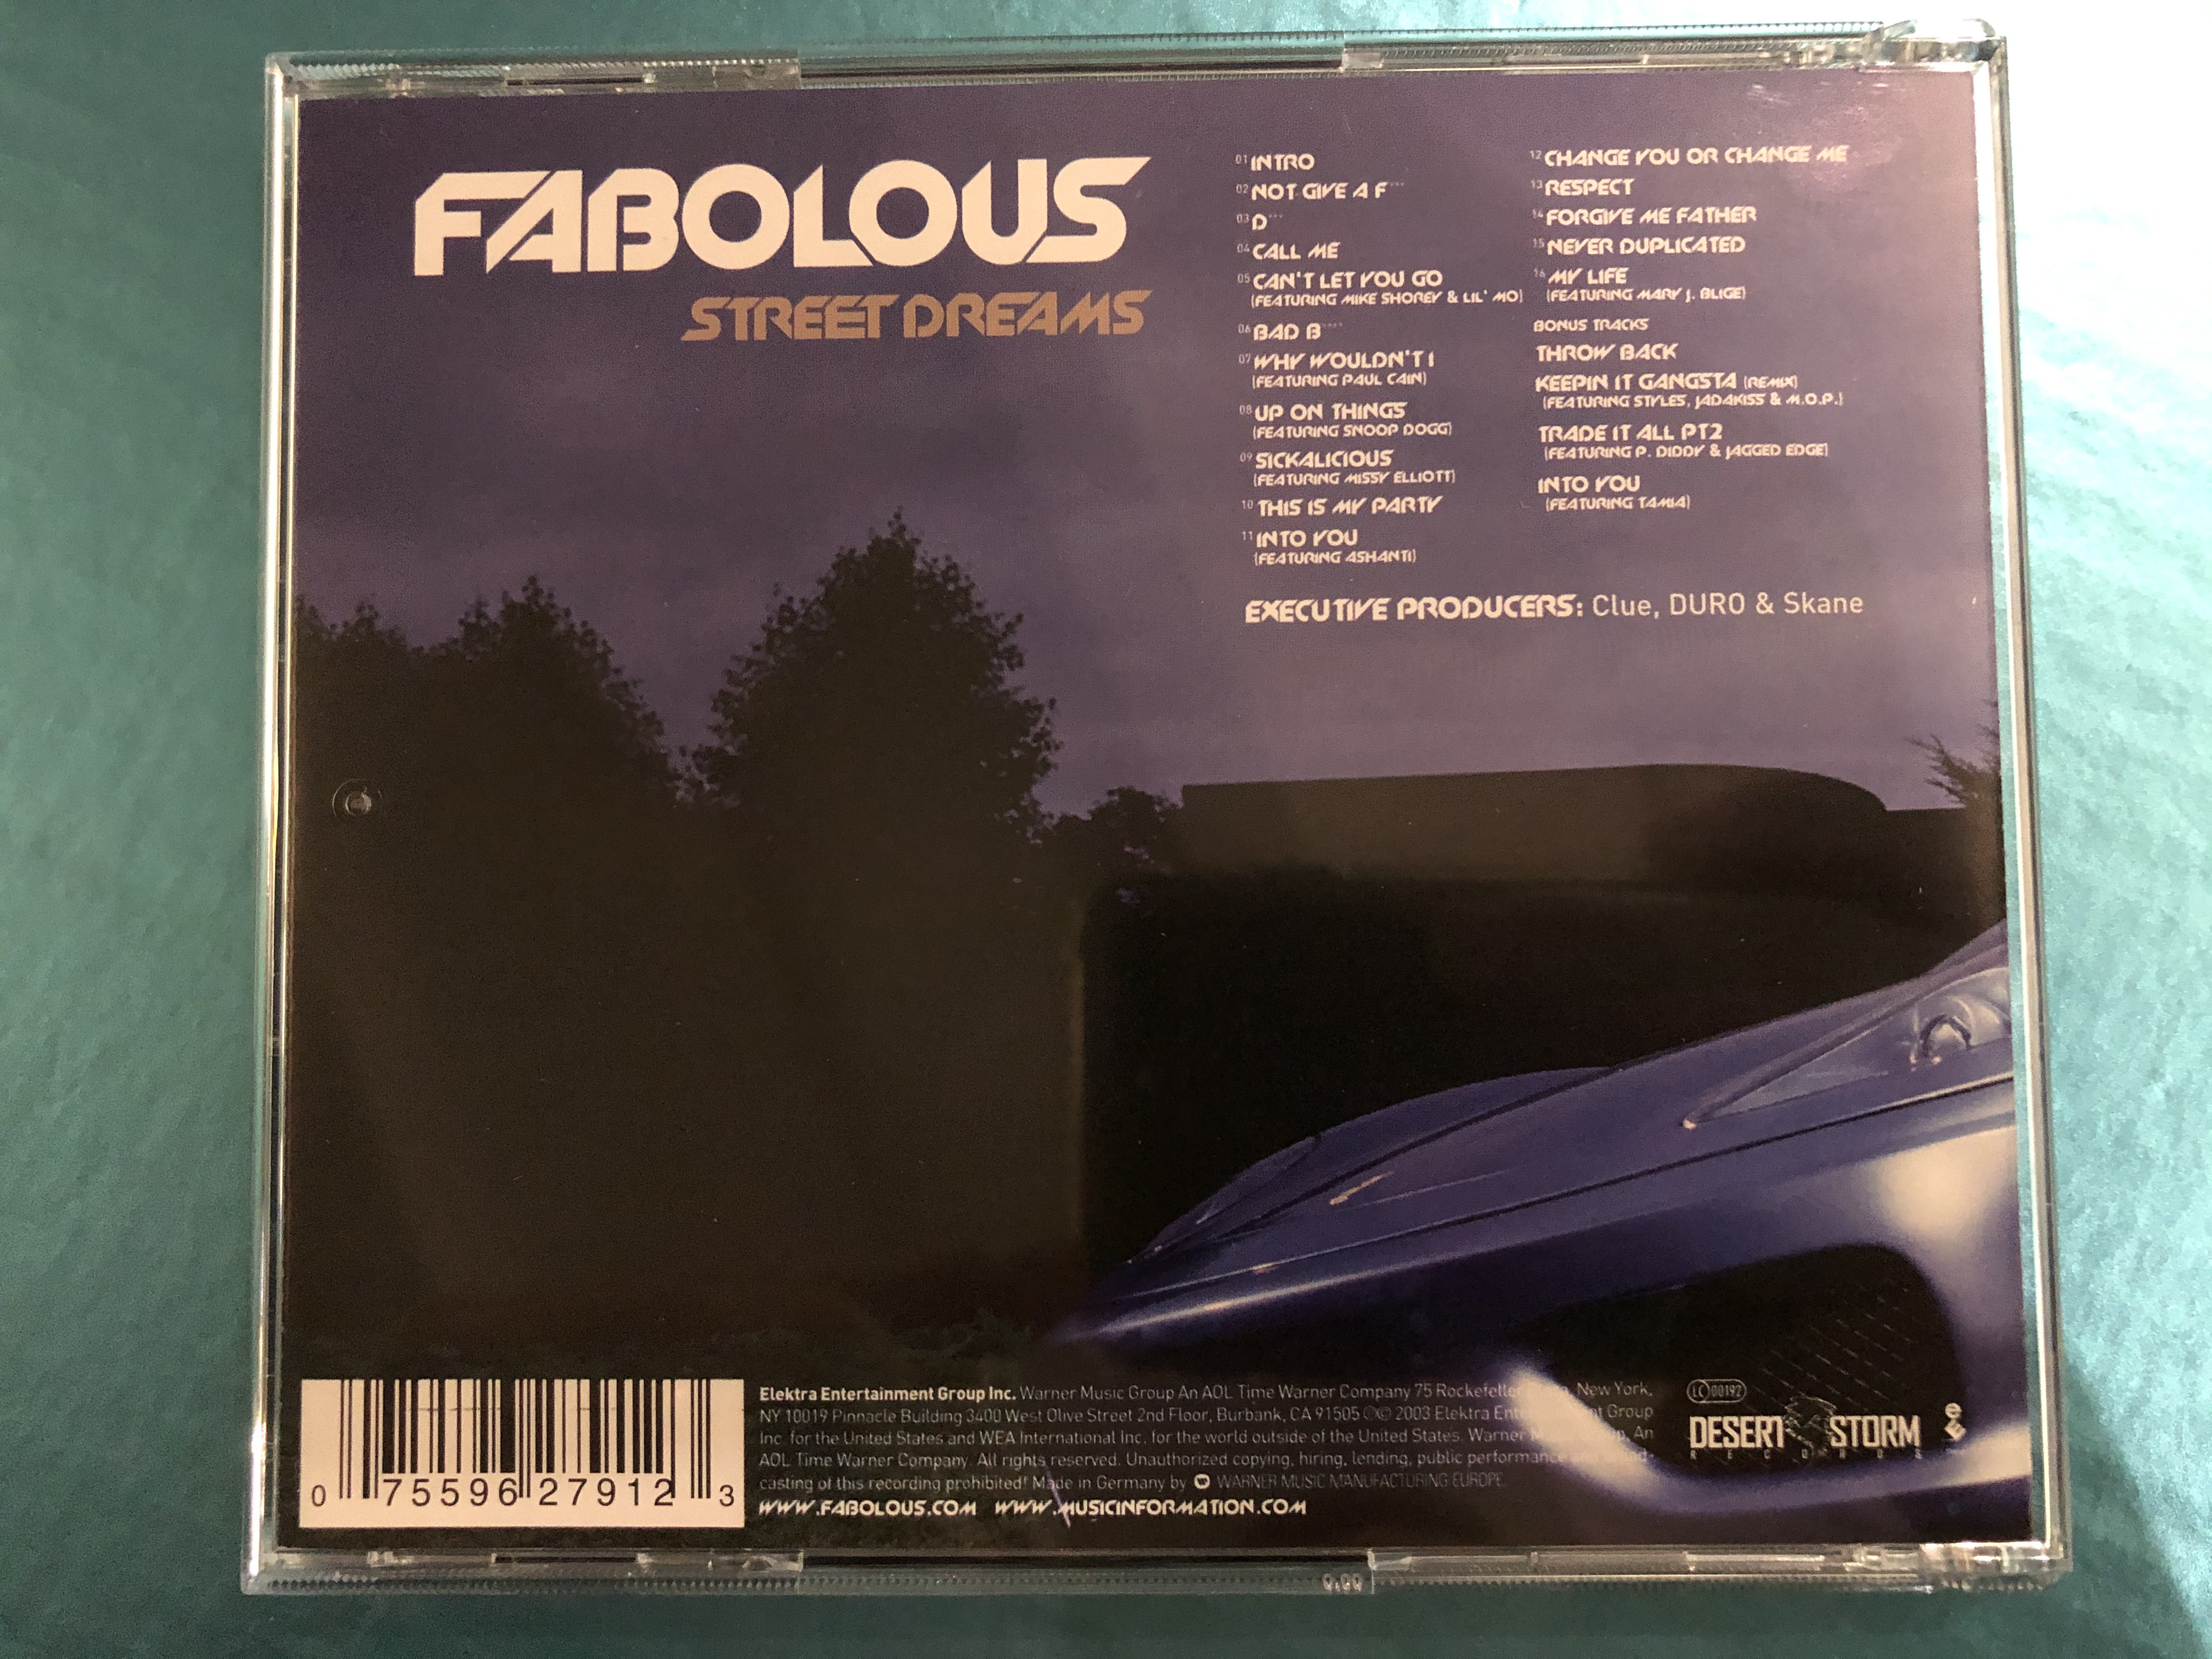 fabolous-street-dreams-elektra-audio-cd-2003-7559-62791-2-2-.jpg